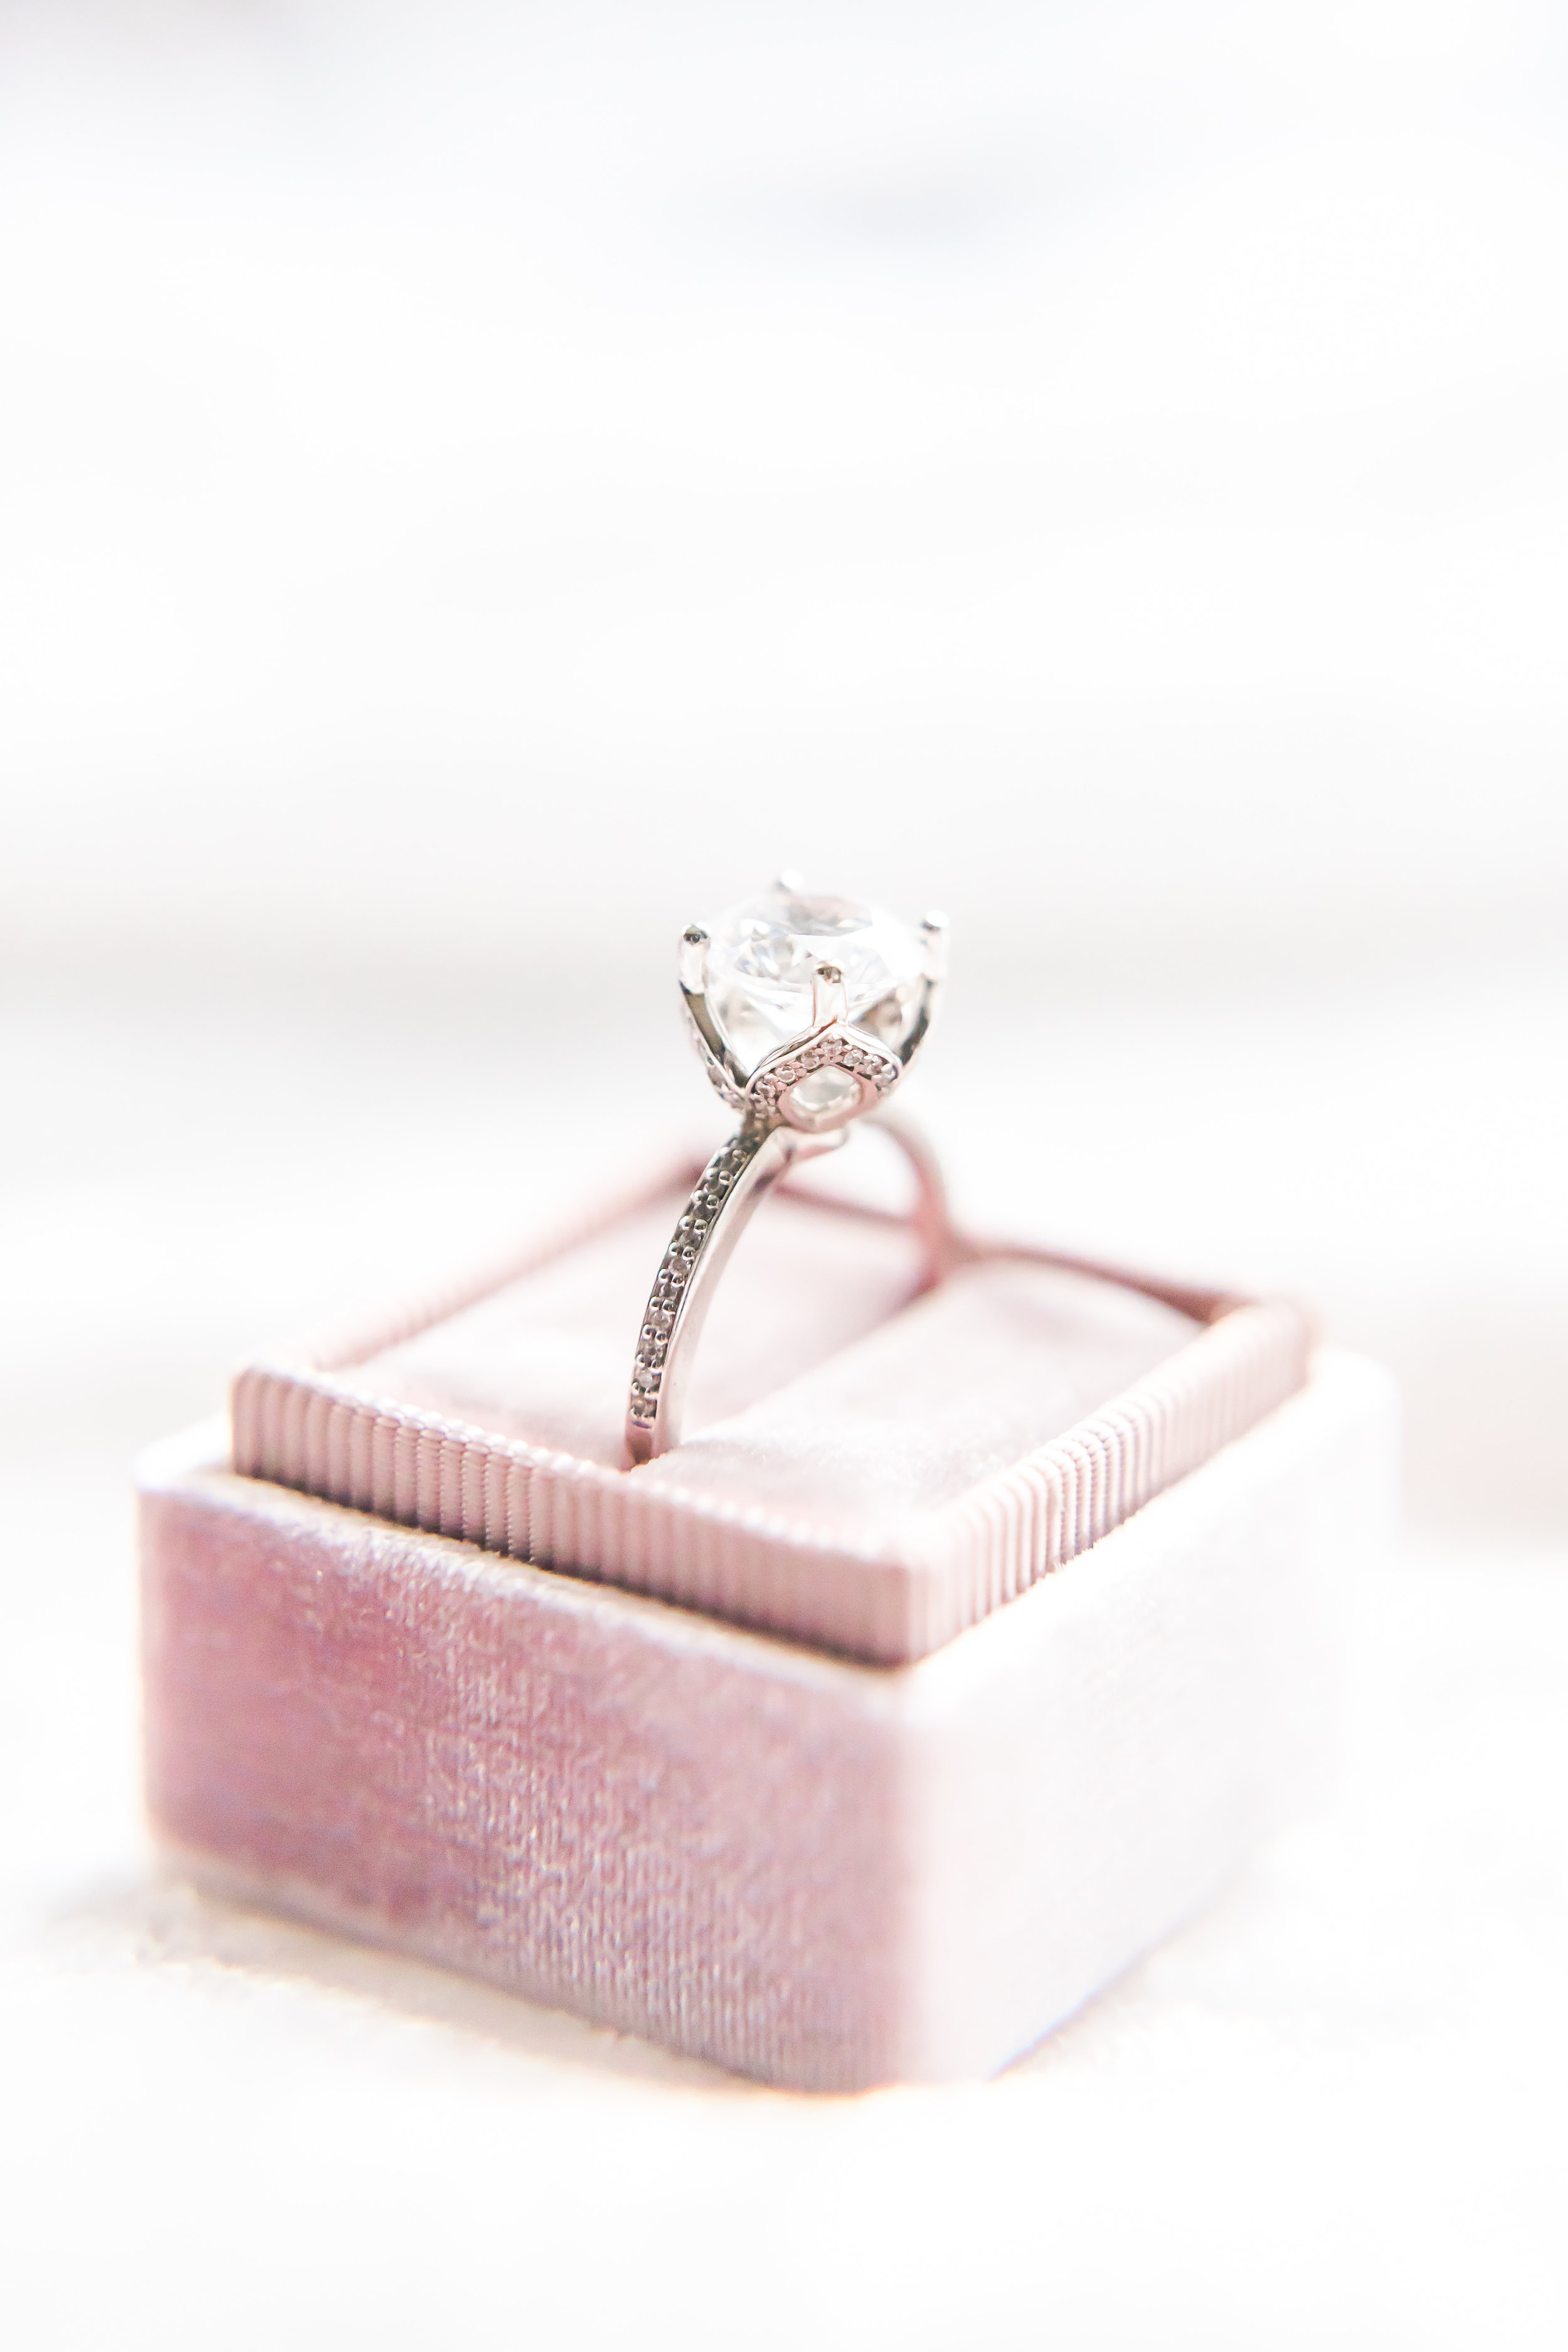 Diamond Setting Types, Popular Types of Ring Settings | Jewelry knowledge,  Jewelry, Fine jewelry